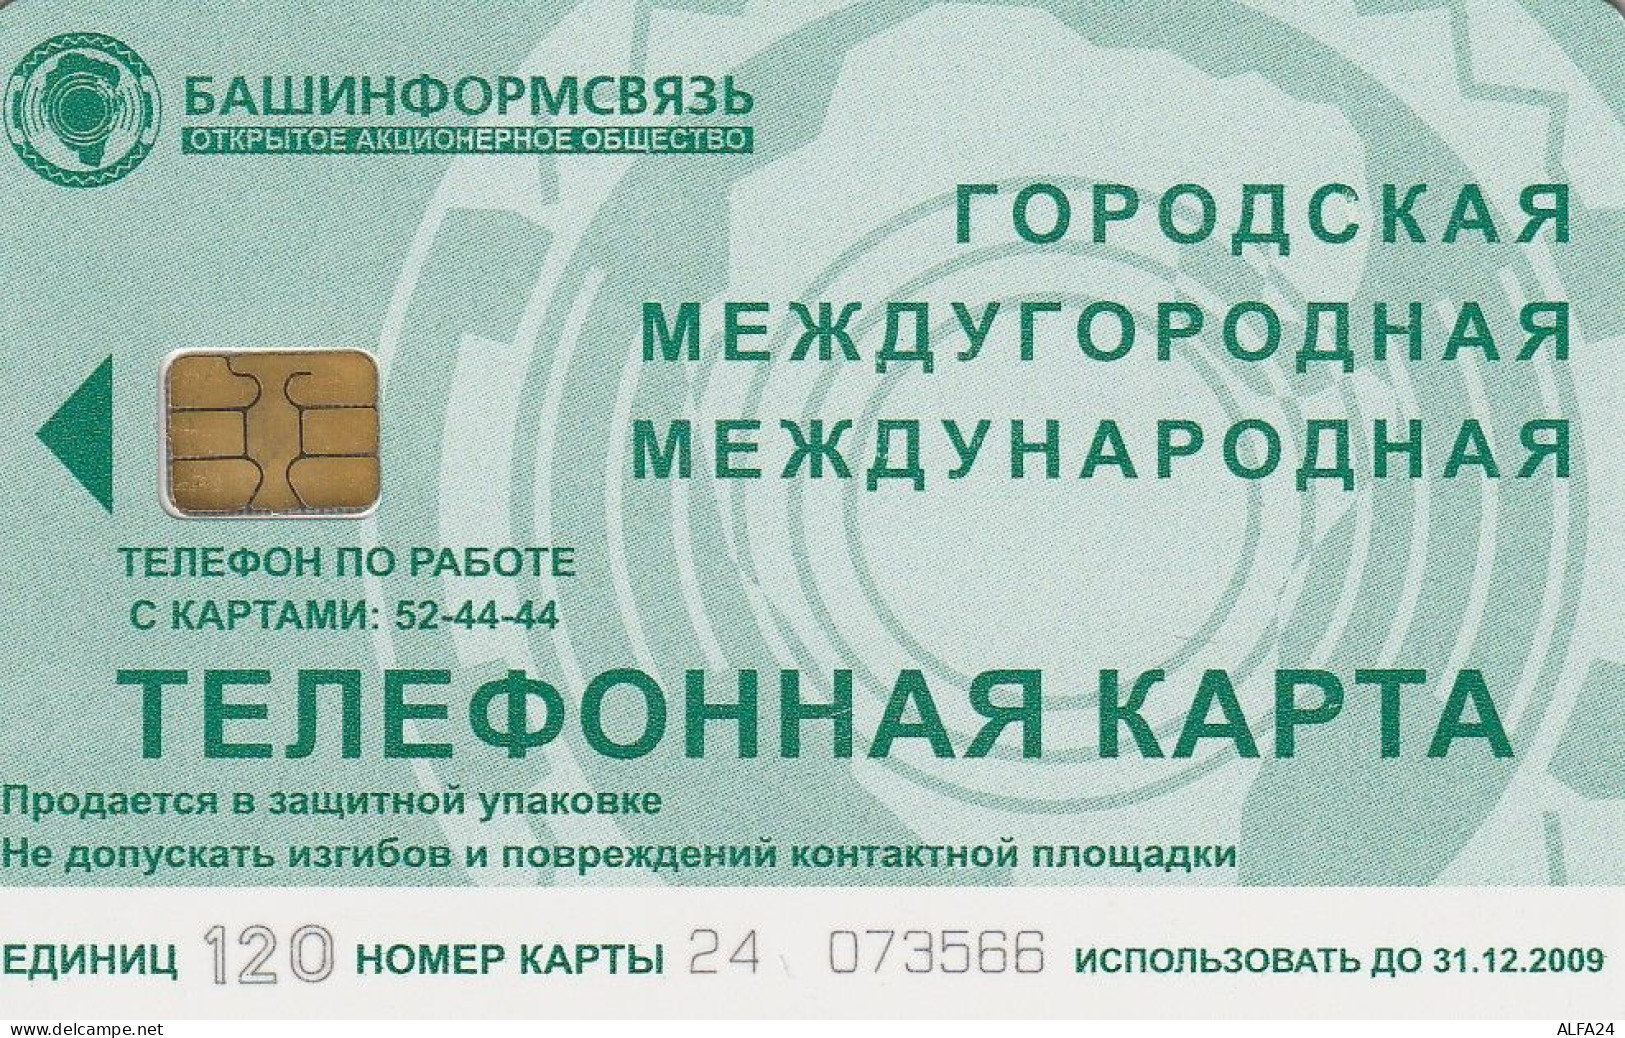 PHONE CARD RUSSIA Bashinformsvyaz - Ufa (E9.25.5 - Russie